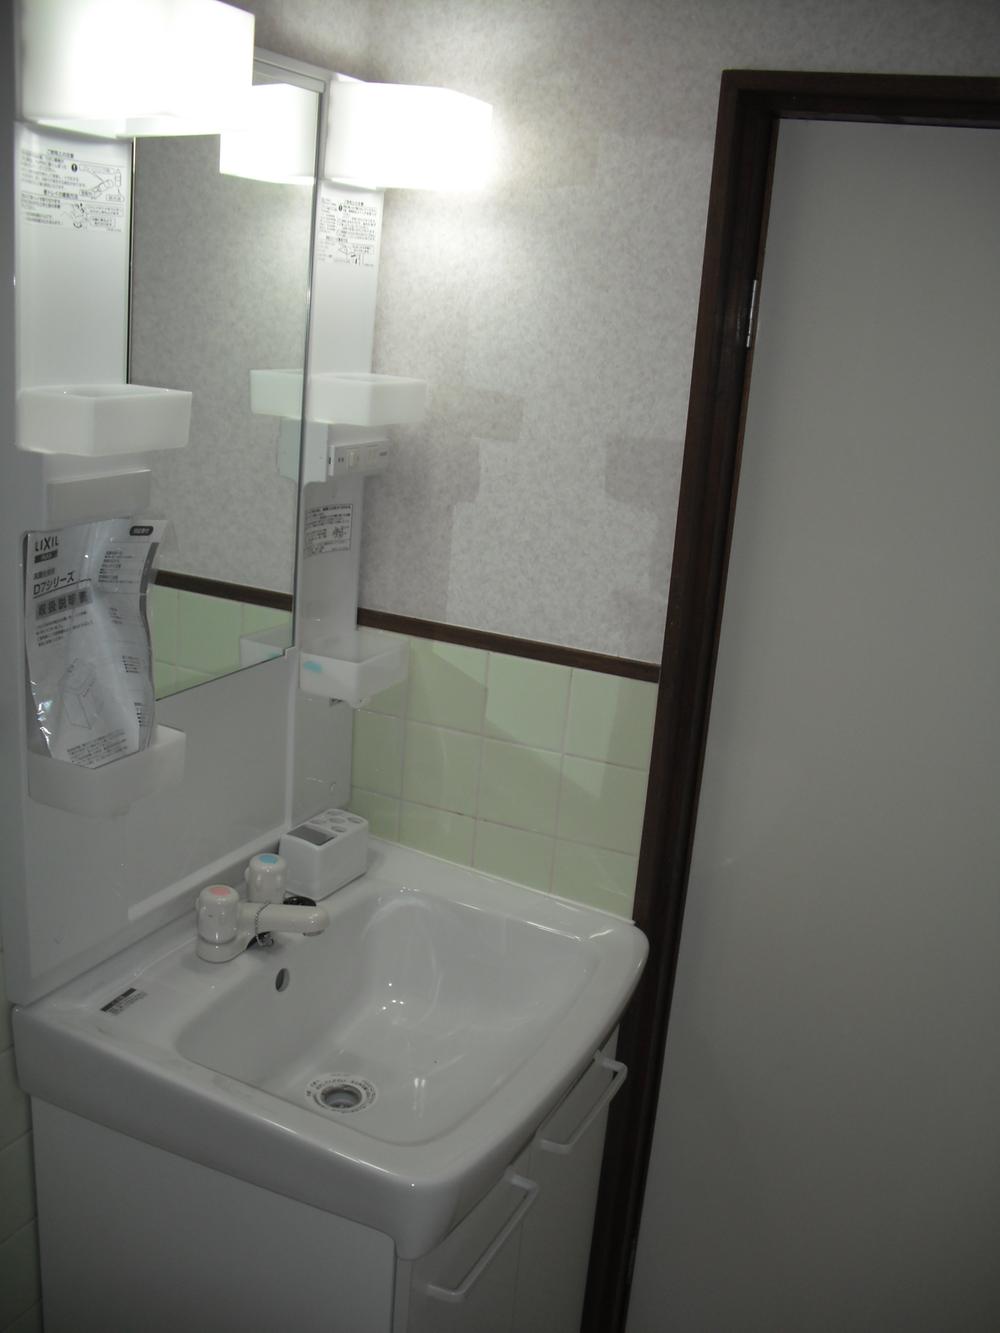 Wash basin, toilet. Takasago Nakasuji Residential home Renovated local